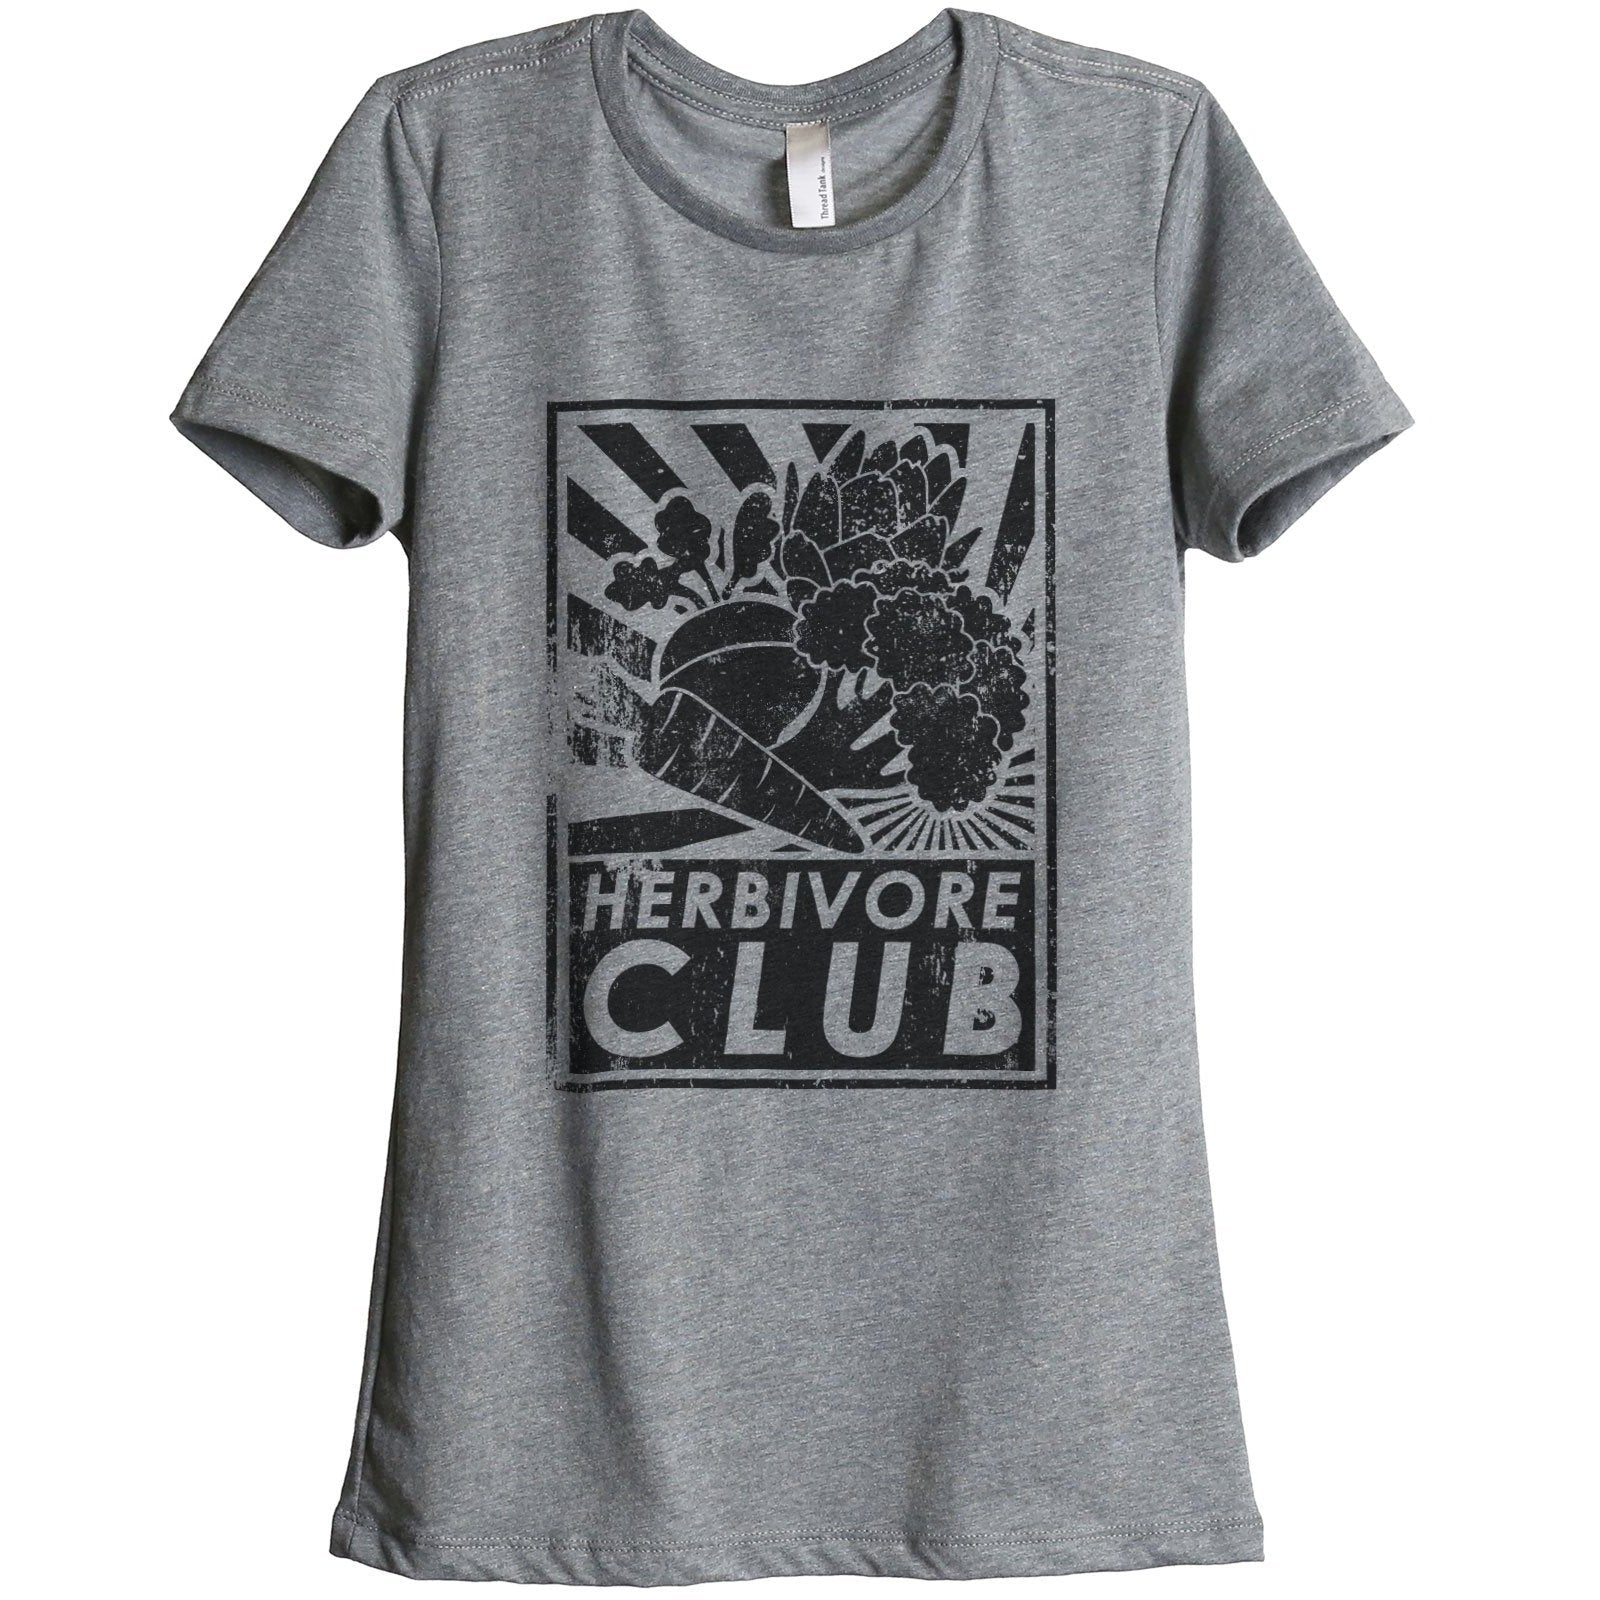 Herbivore Club Women's Relaxed Crewneck T-Shirt Top Tee Heather Grey